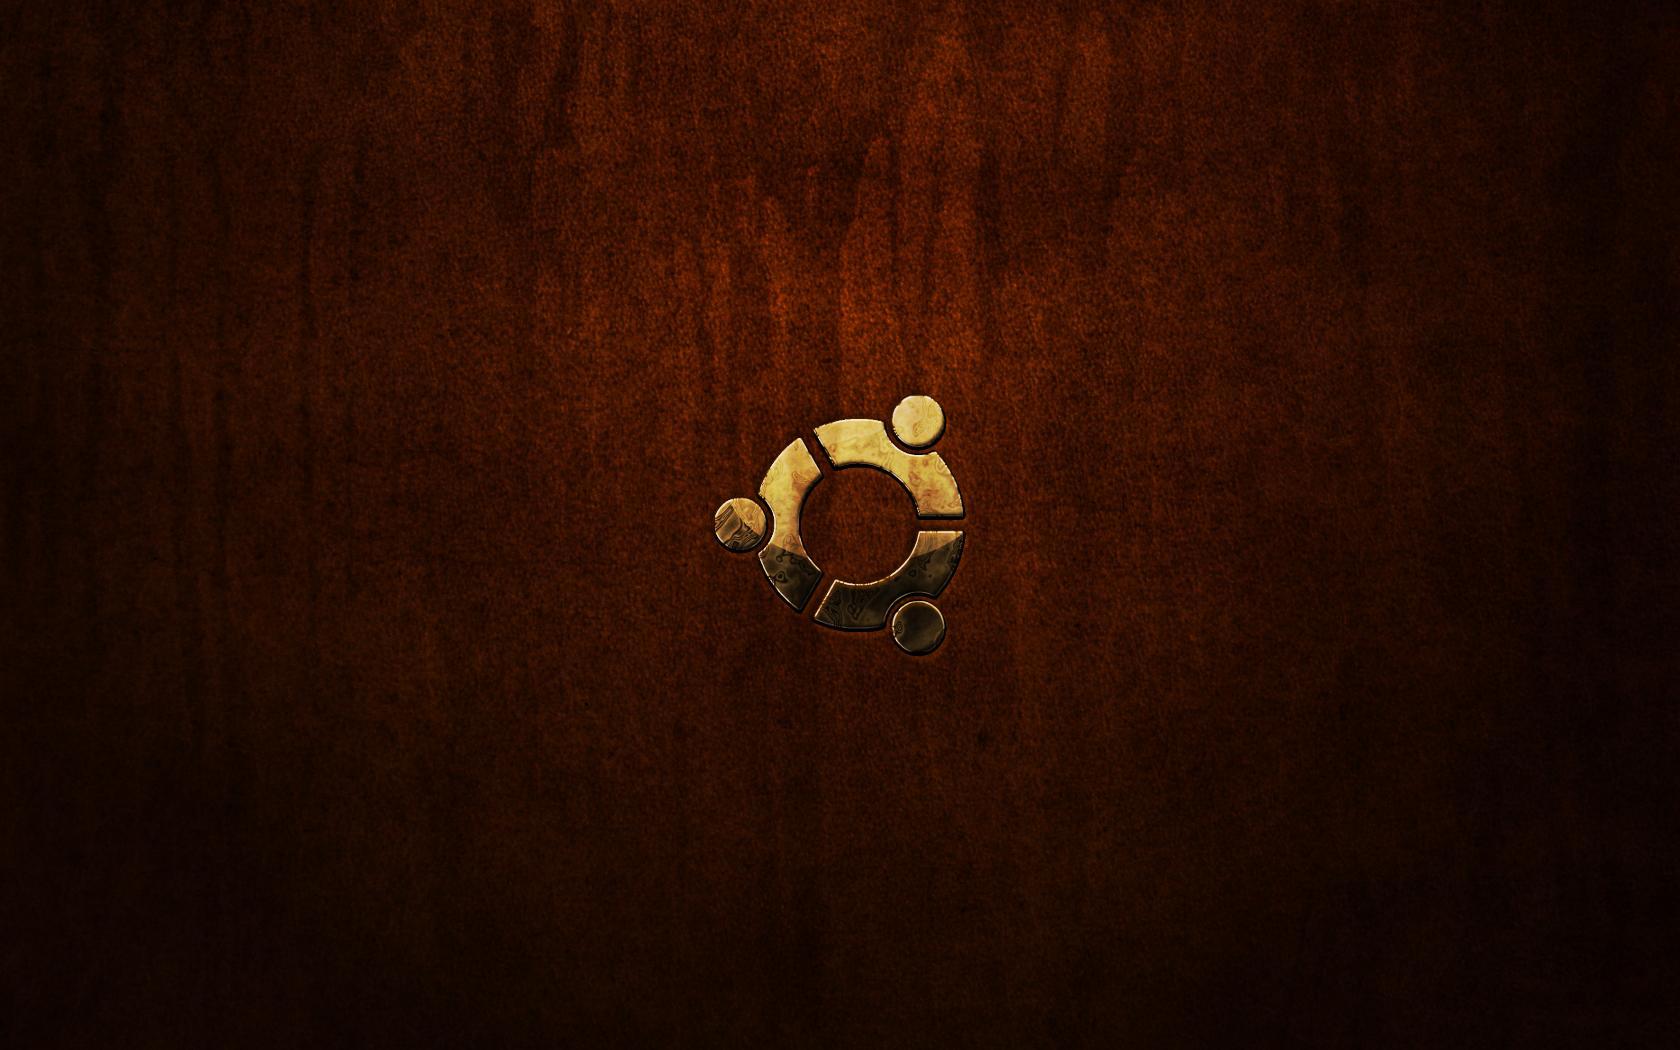 Linux Ubuntu Distro Logo Distressed Brown Leather HD Wallpaper